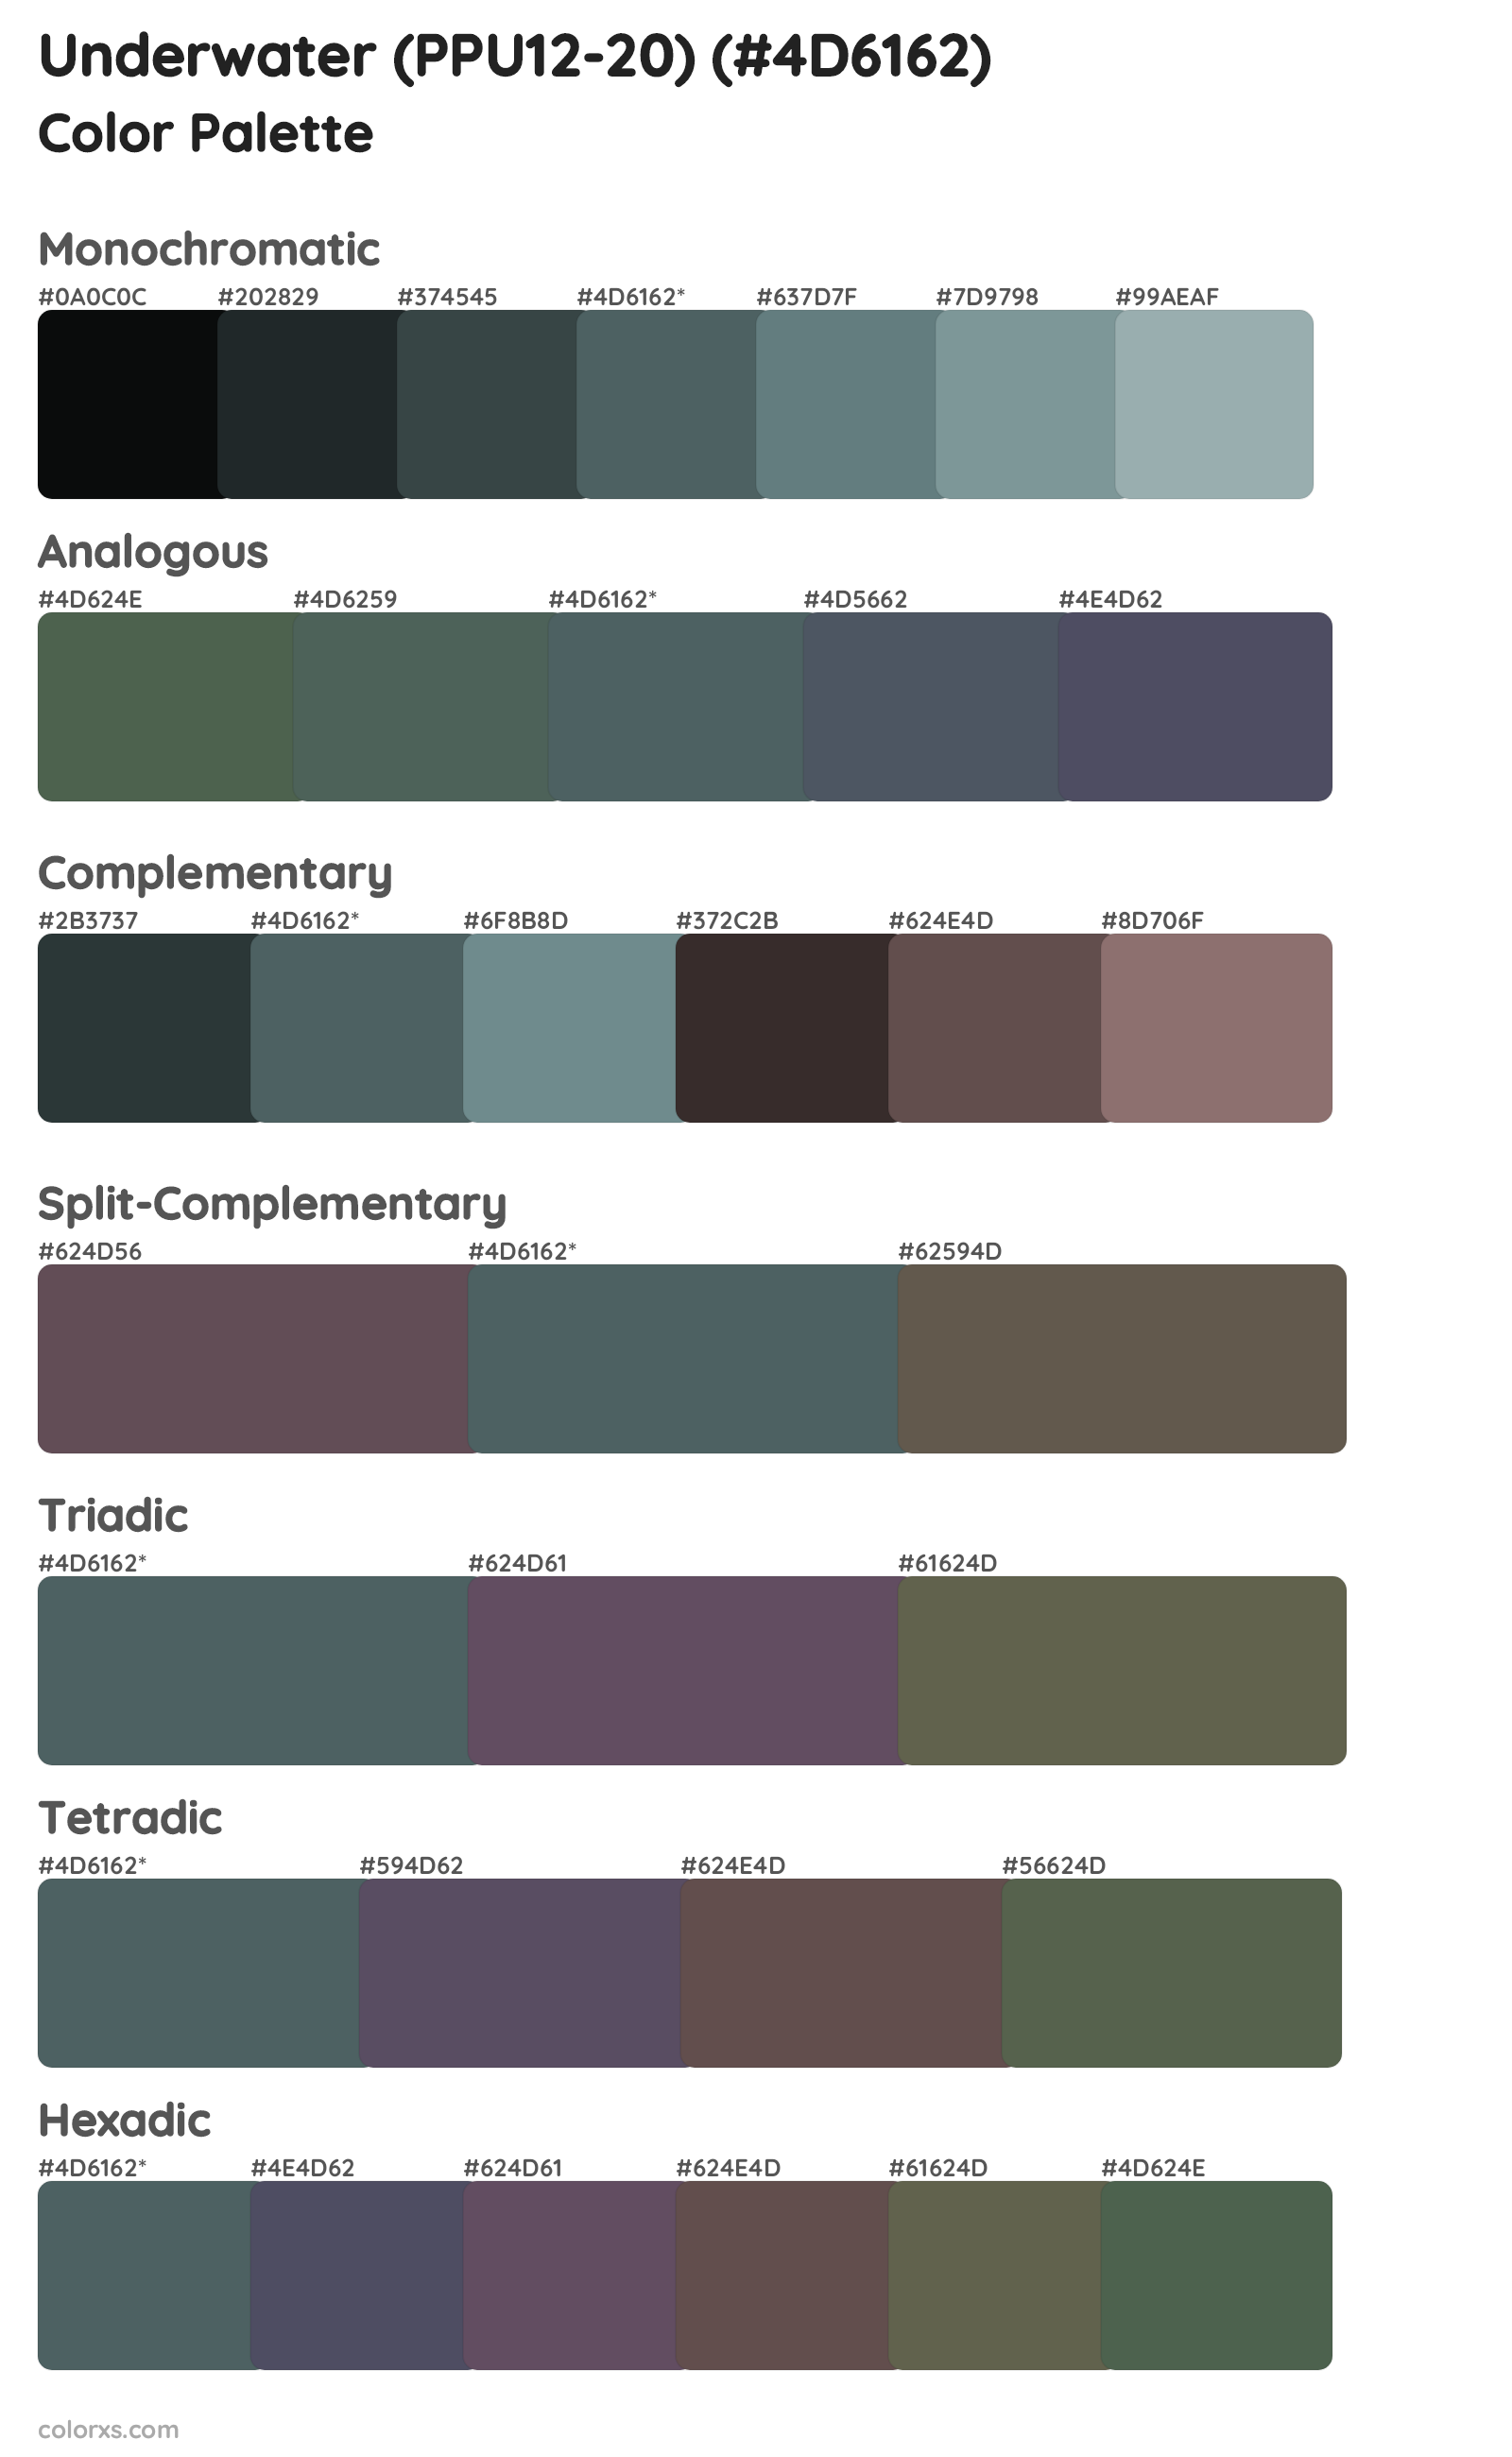 Underwater (PPU12-20) Color Scheme Palettes